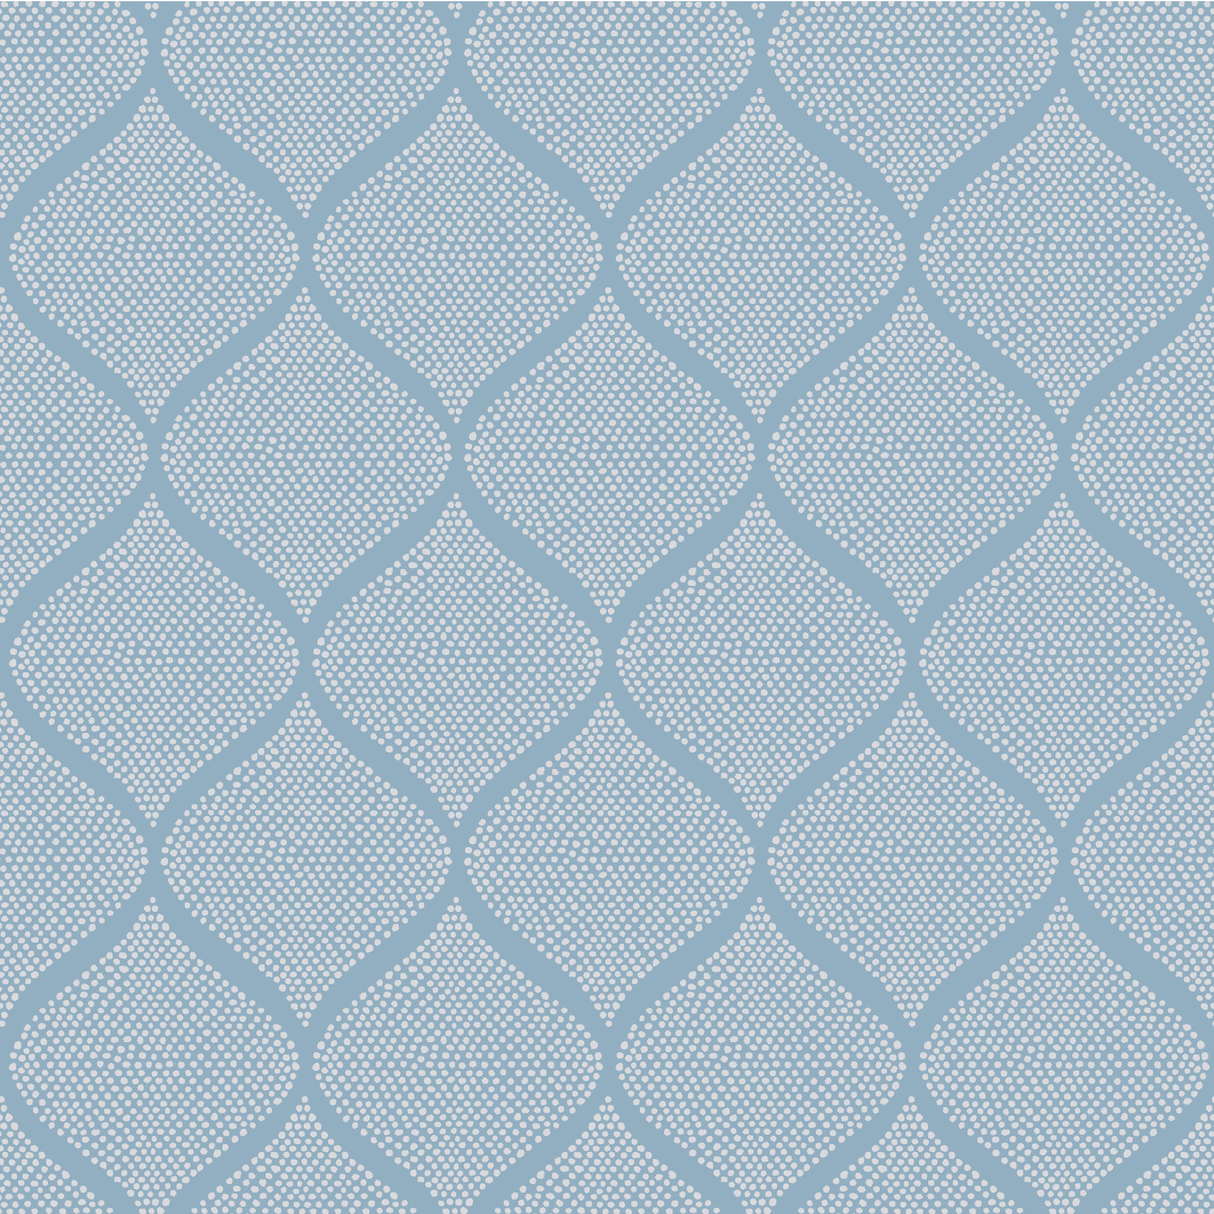 Fez Horizon Blue Fabric Sample